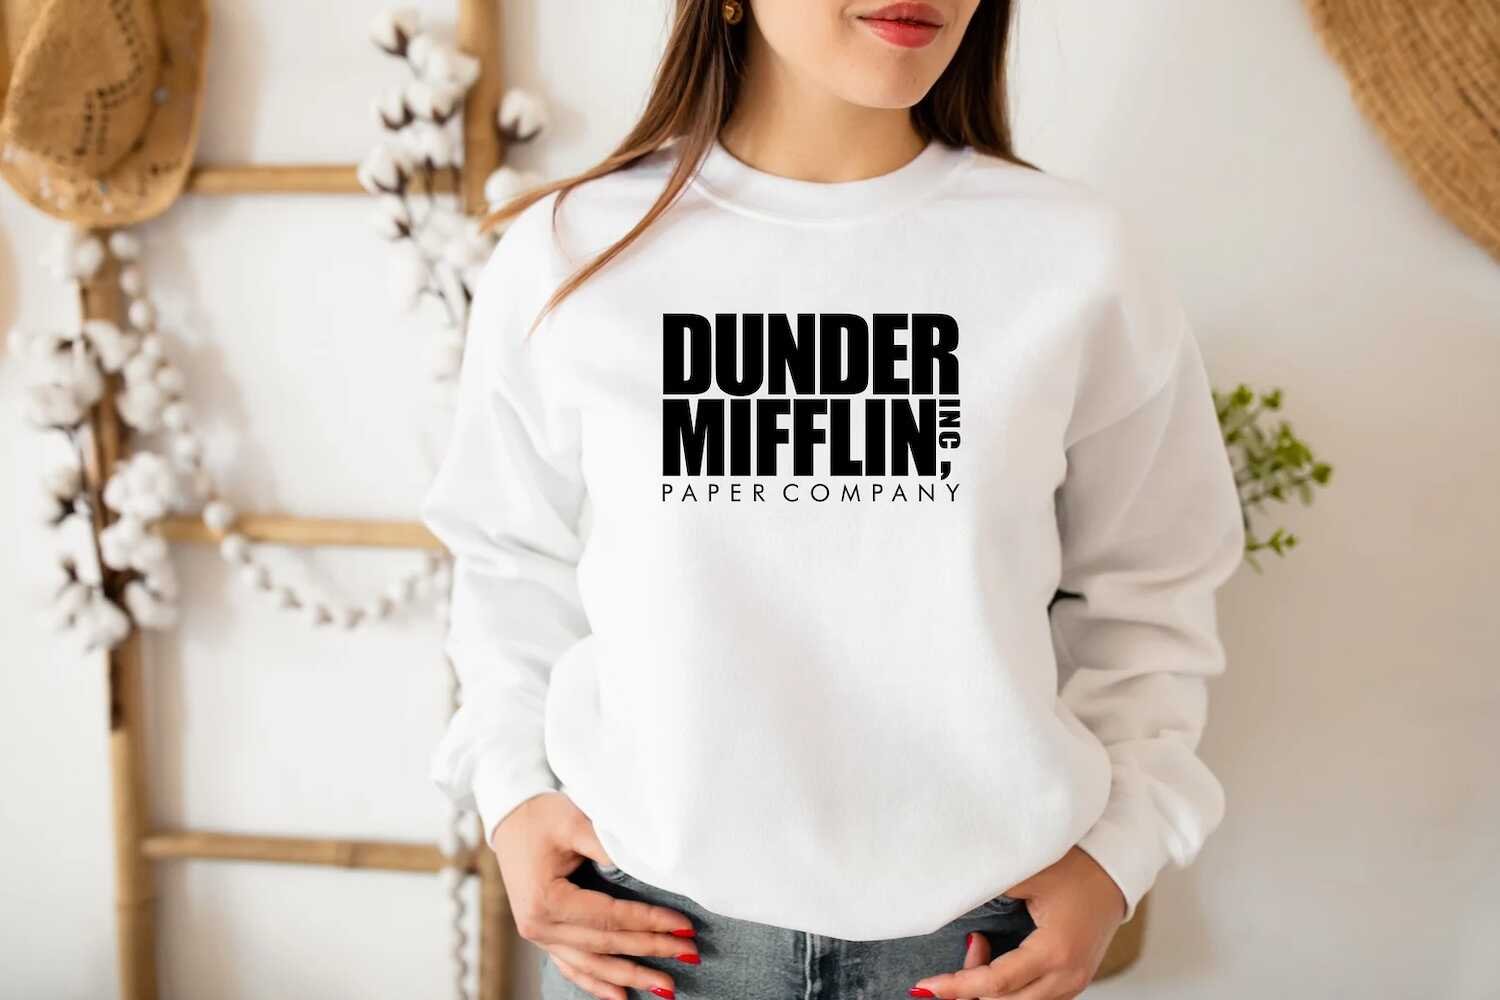 The Office Dunder Mifflin Sweatshirt